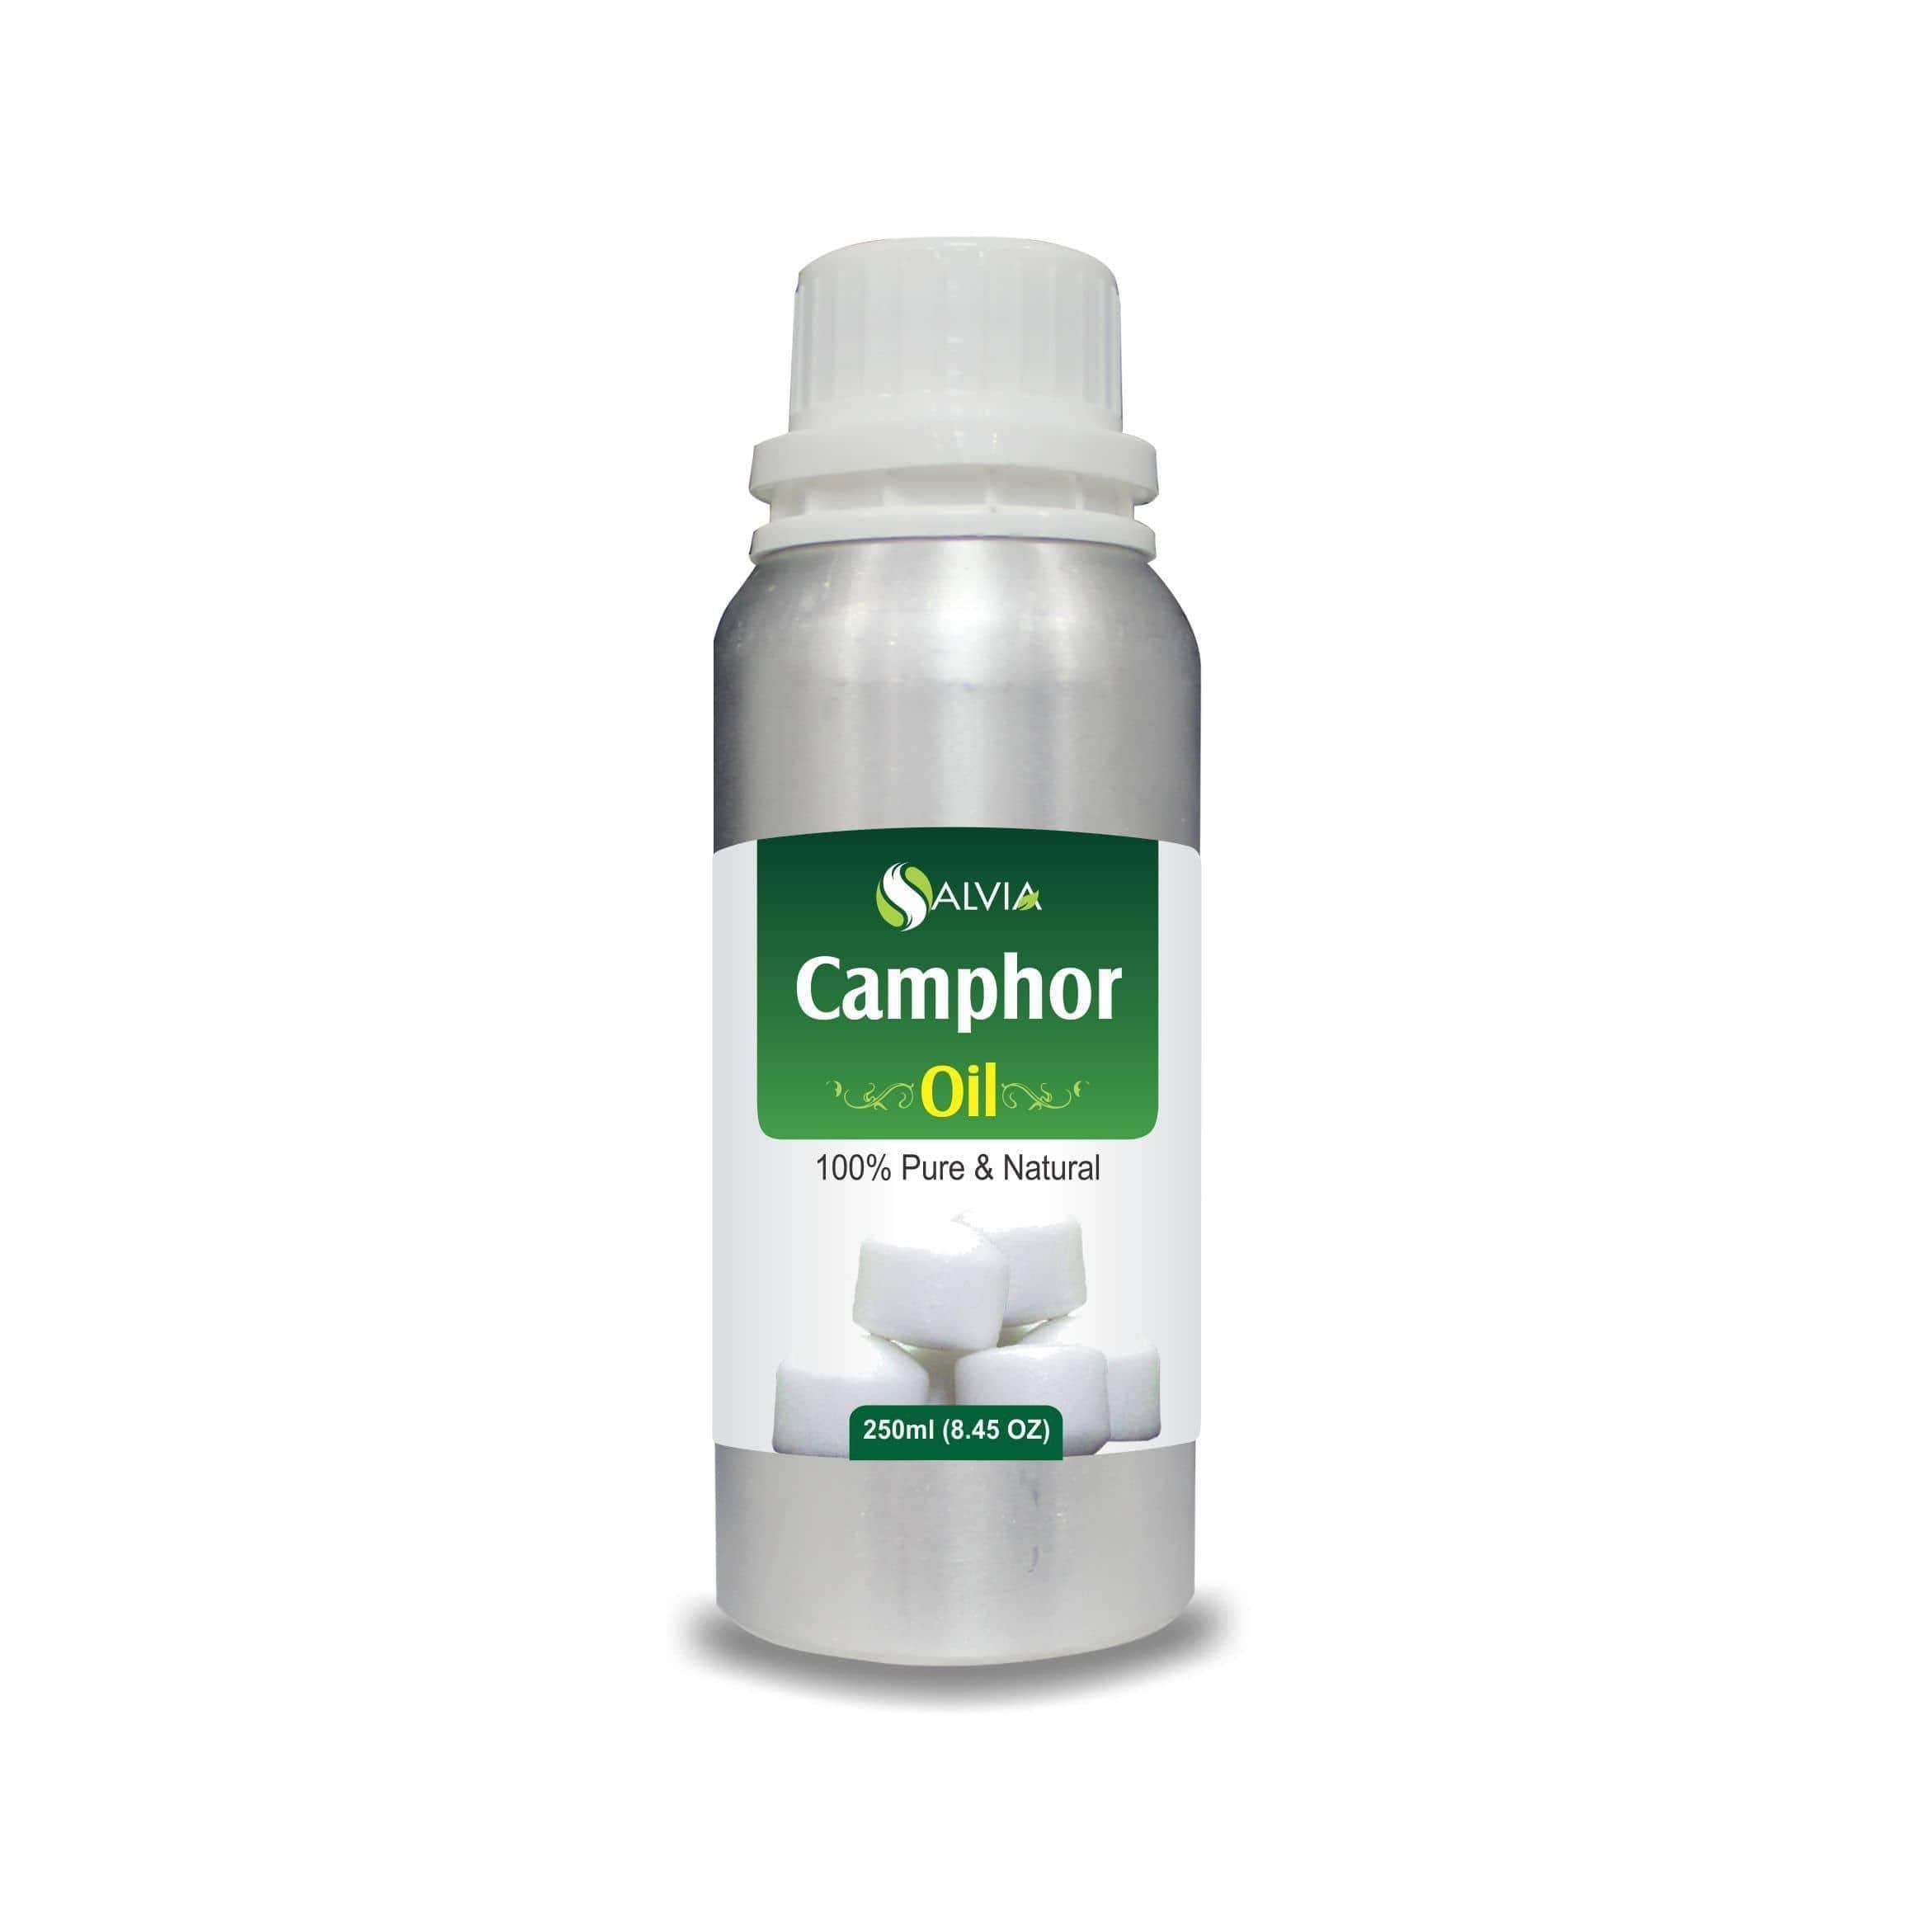 Sun Essential Oils - Camphor Essential Oil - 4 Fluid Ounces (Pack